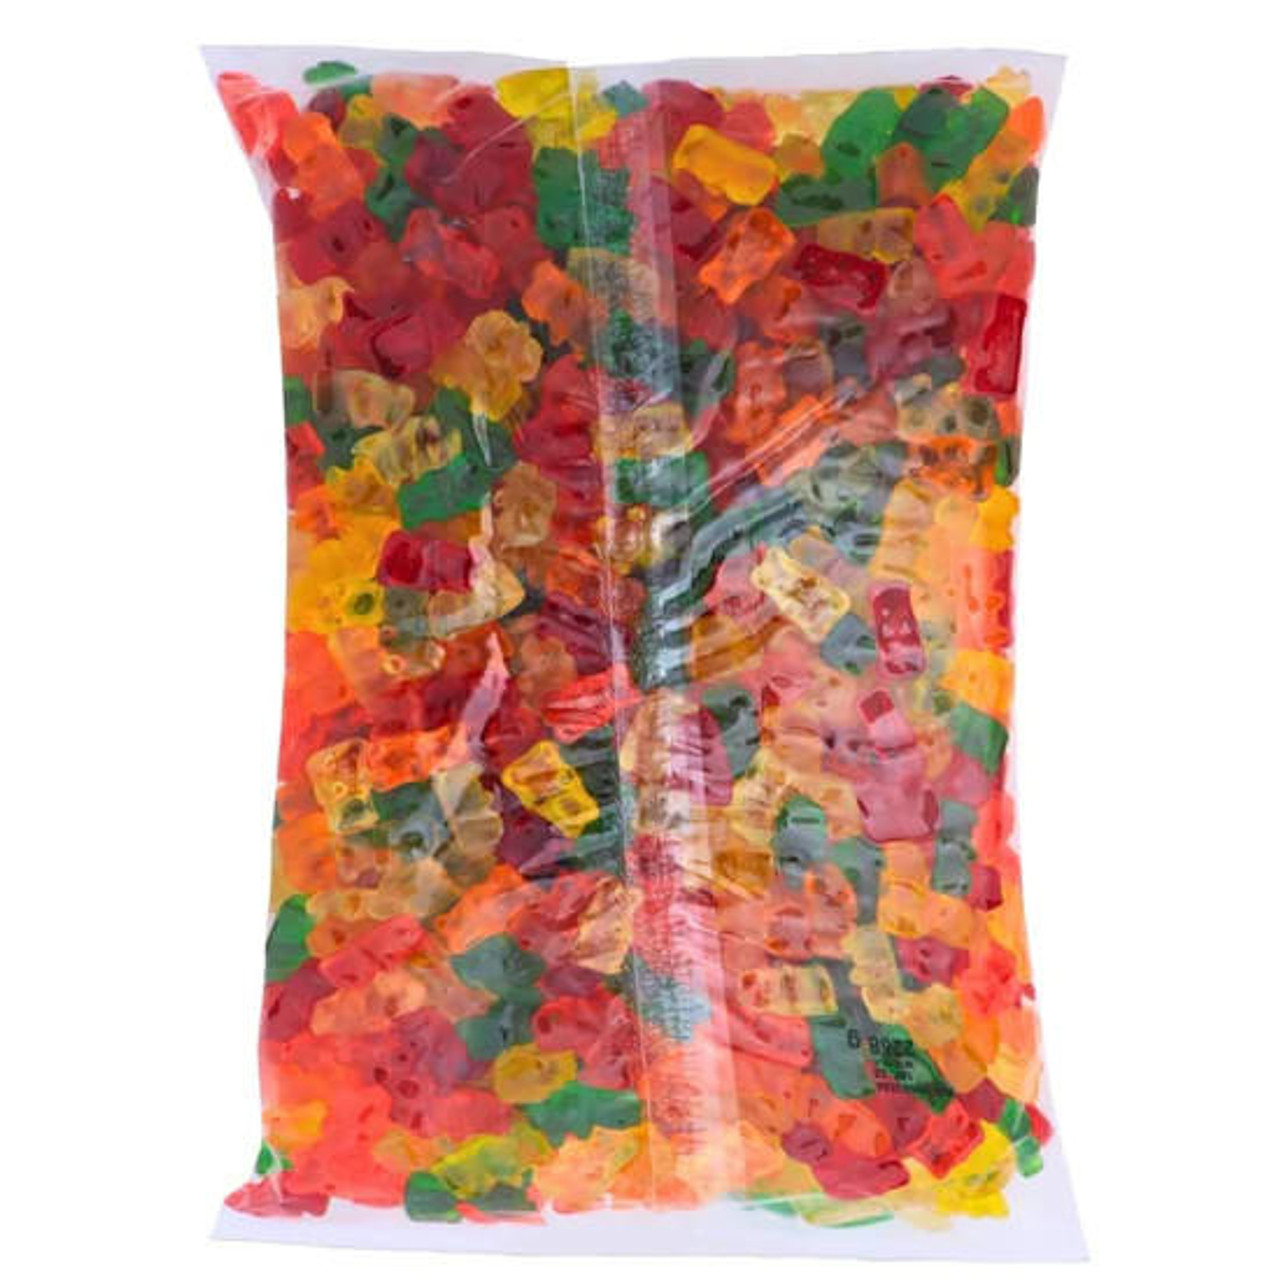  Kervan 12-Color Gummy Bears 5 lb. - 4/Case - Assorted Fruit Flavors 